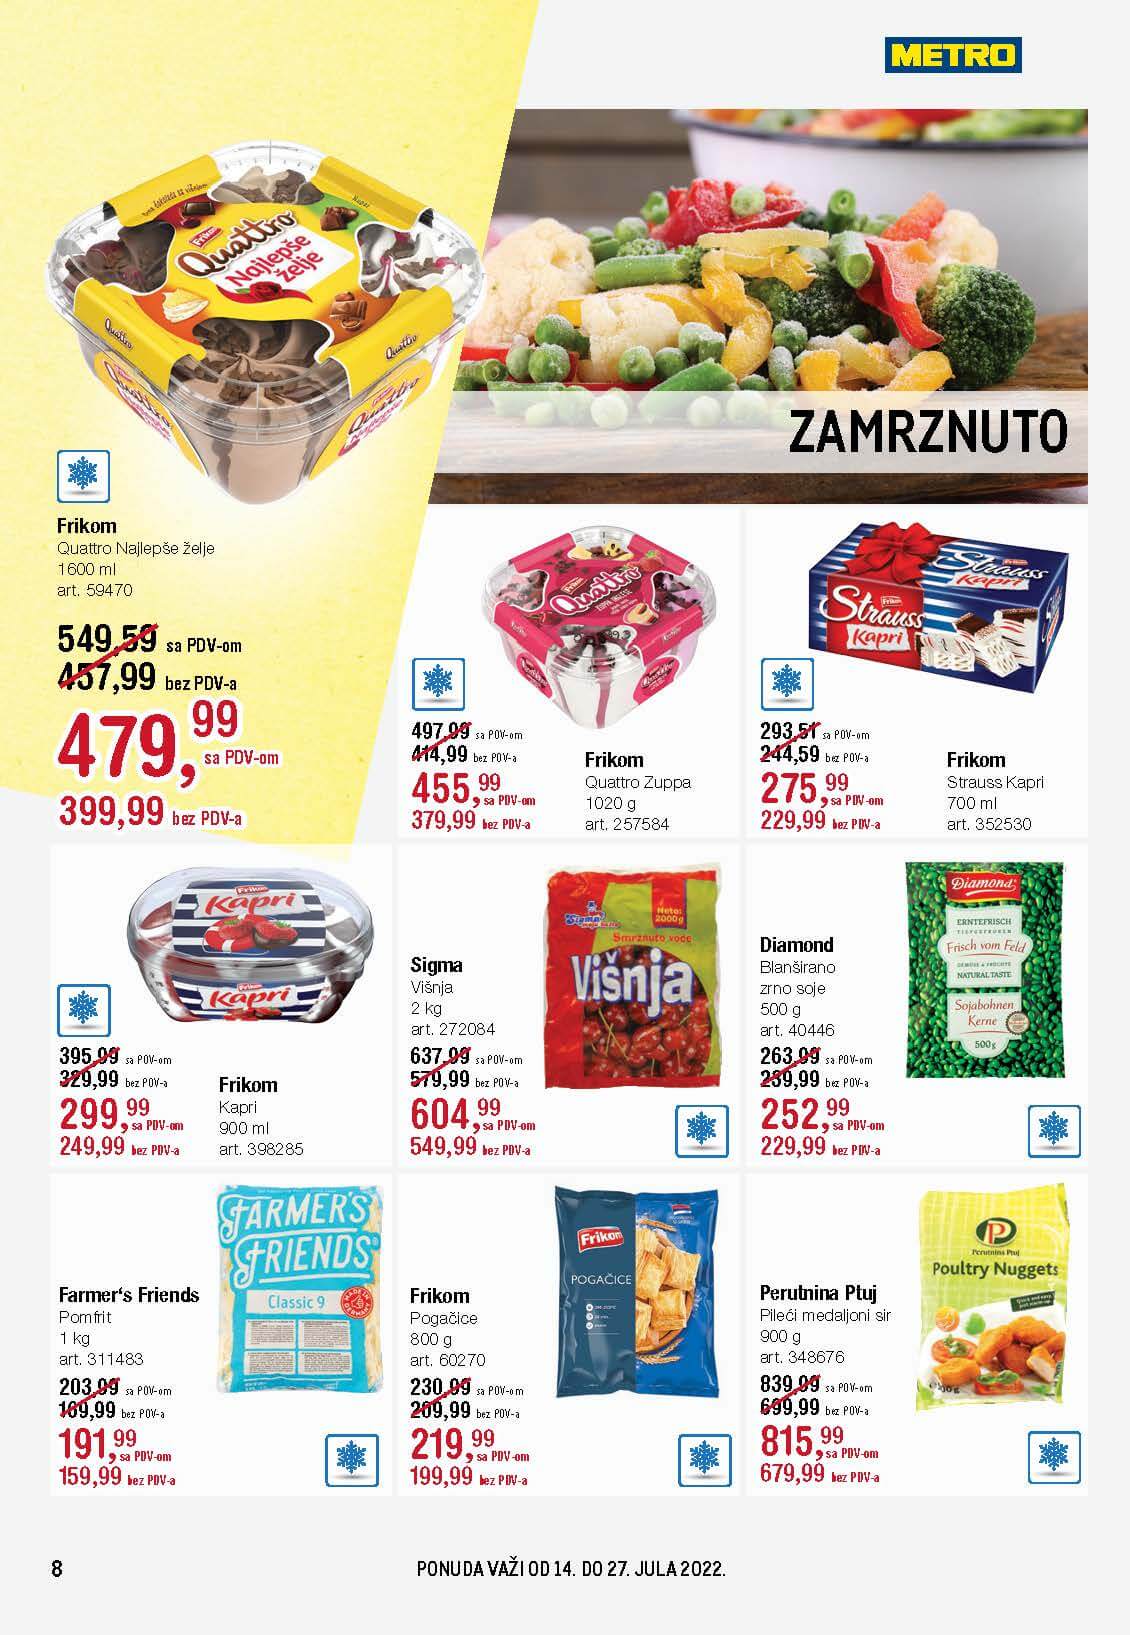 METRO Katalog prehrane i neprehrane JUL 2022 super snizenje do 27.7.2022. Page 08